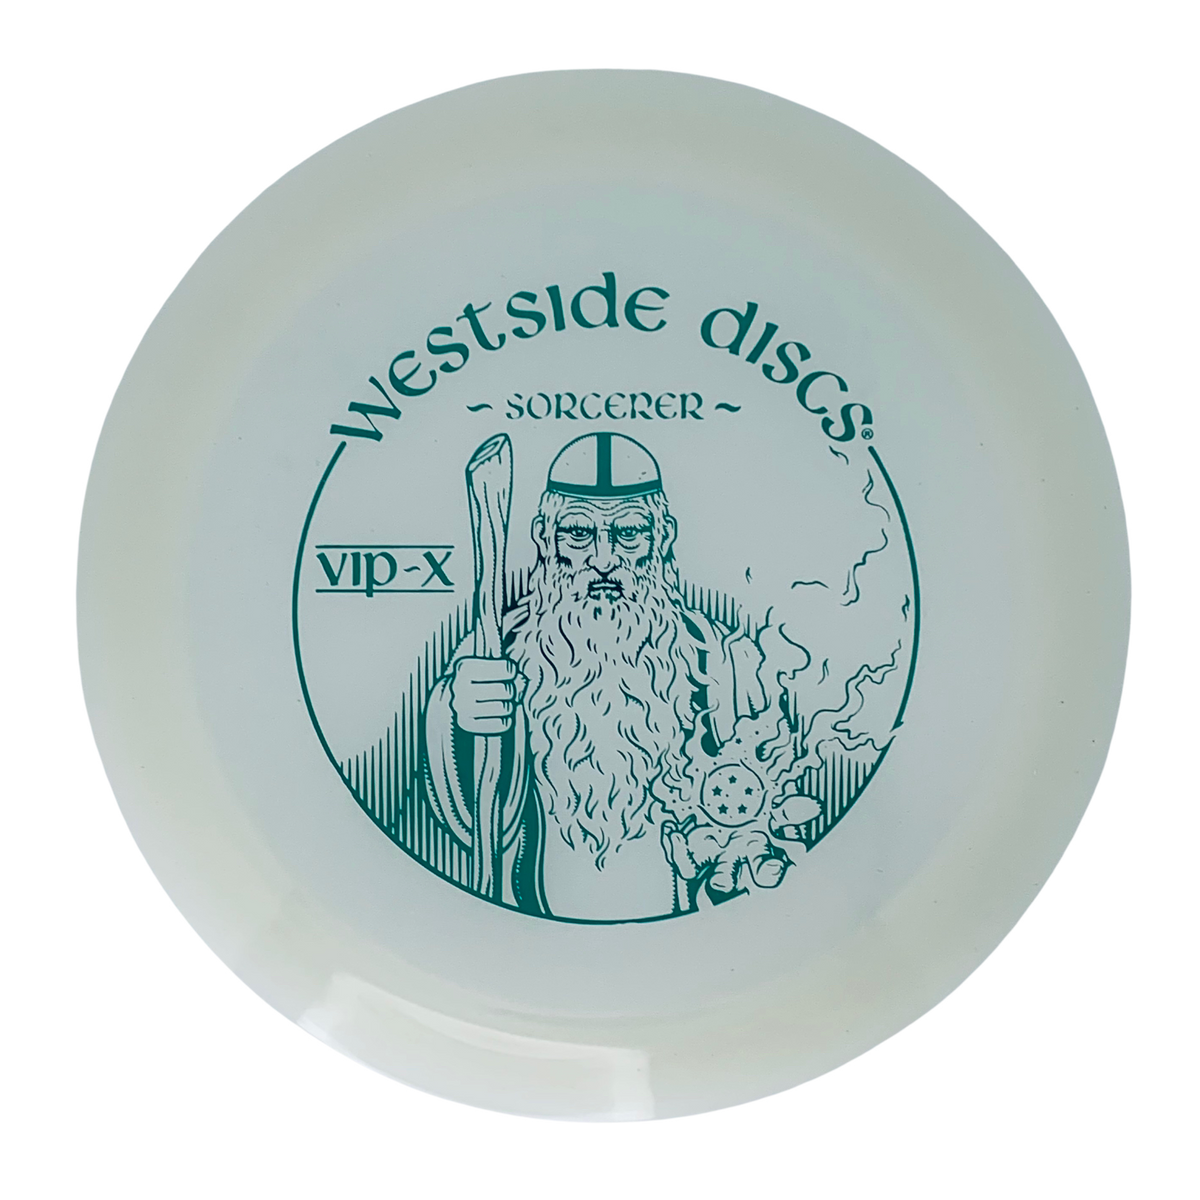 Westside Discs VIP-X Sorcerer - Tyyni Stamp 2022